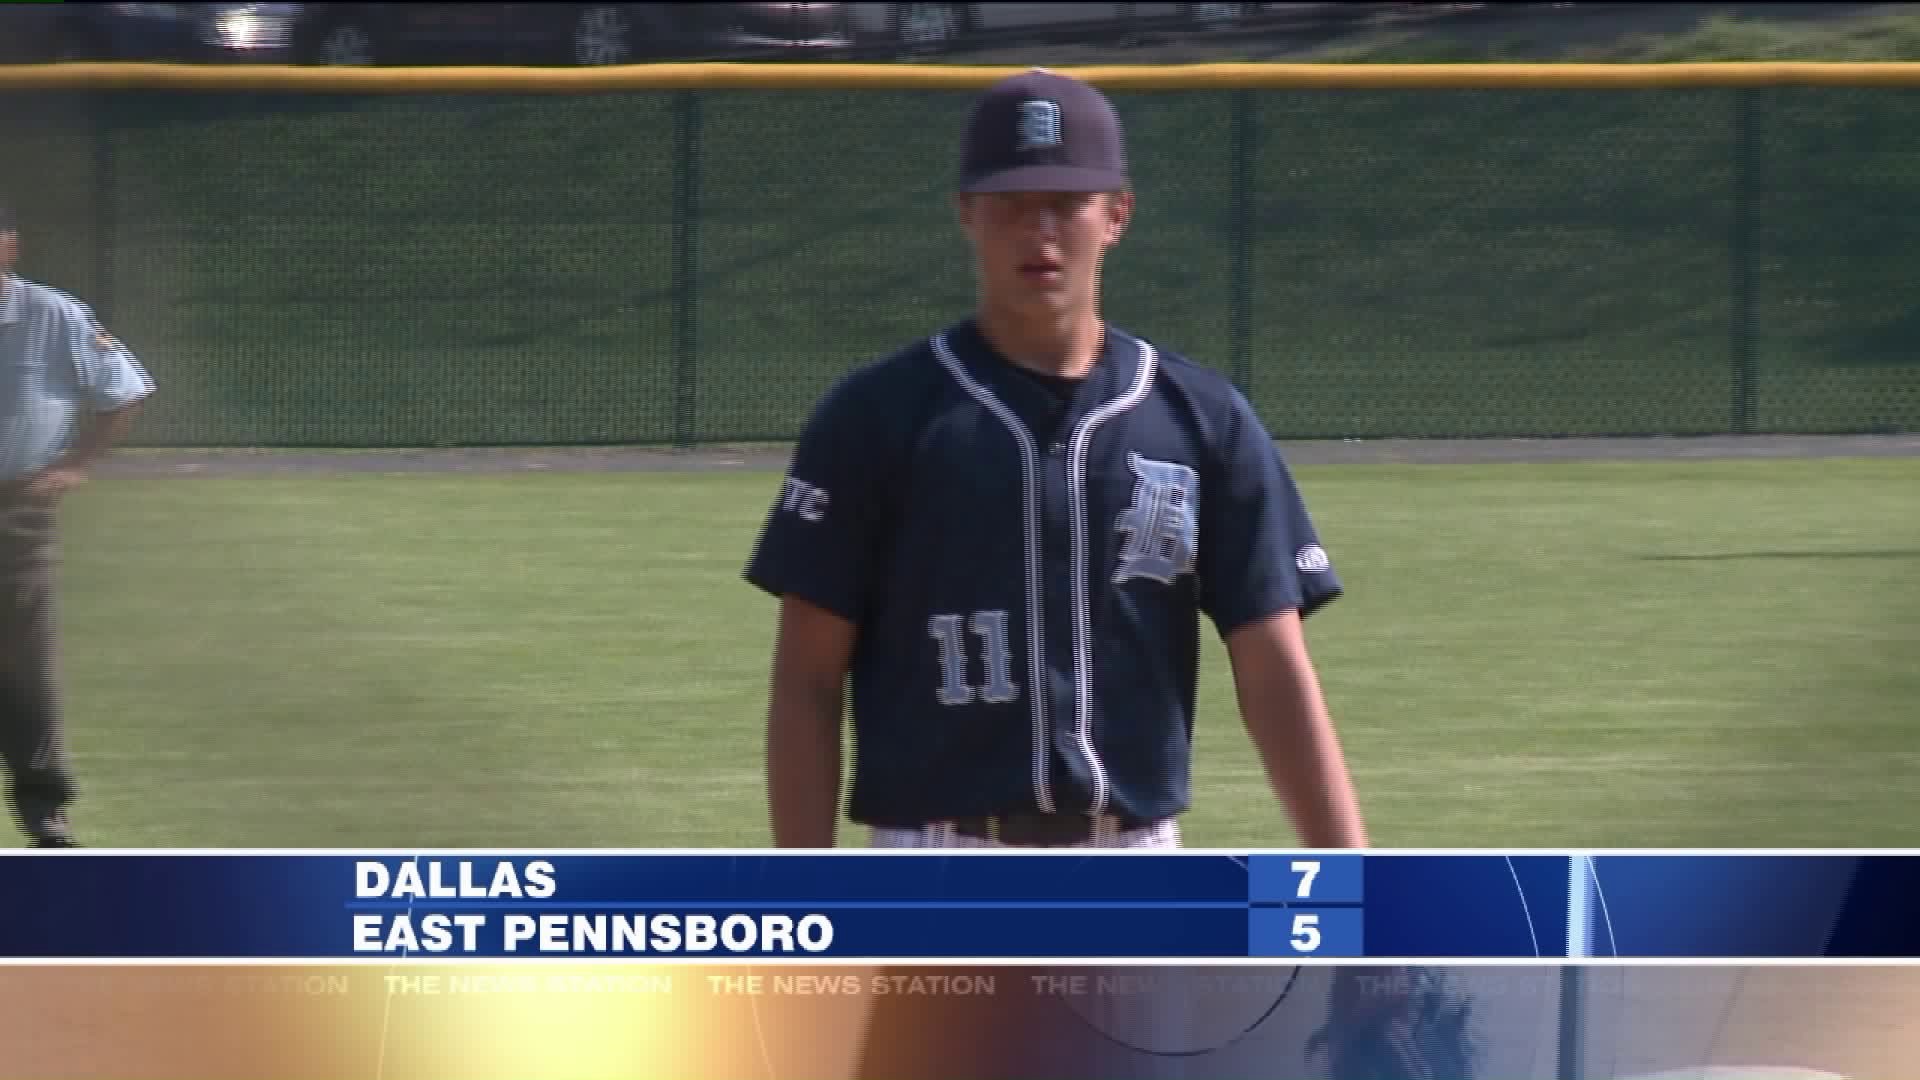 Dallas vs East Pennsboro baseball